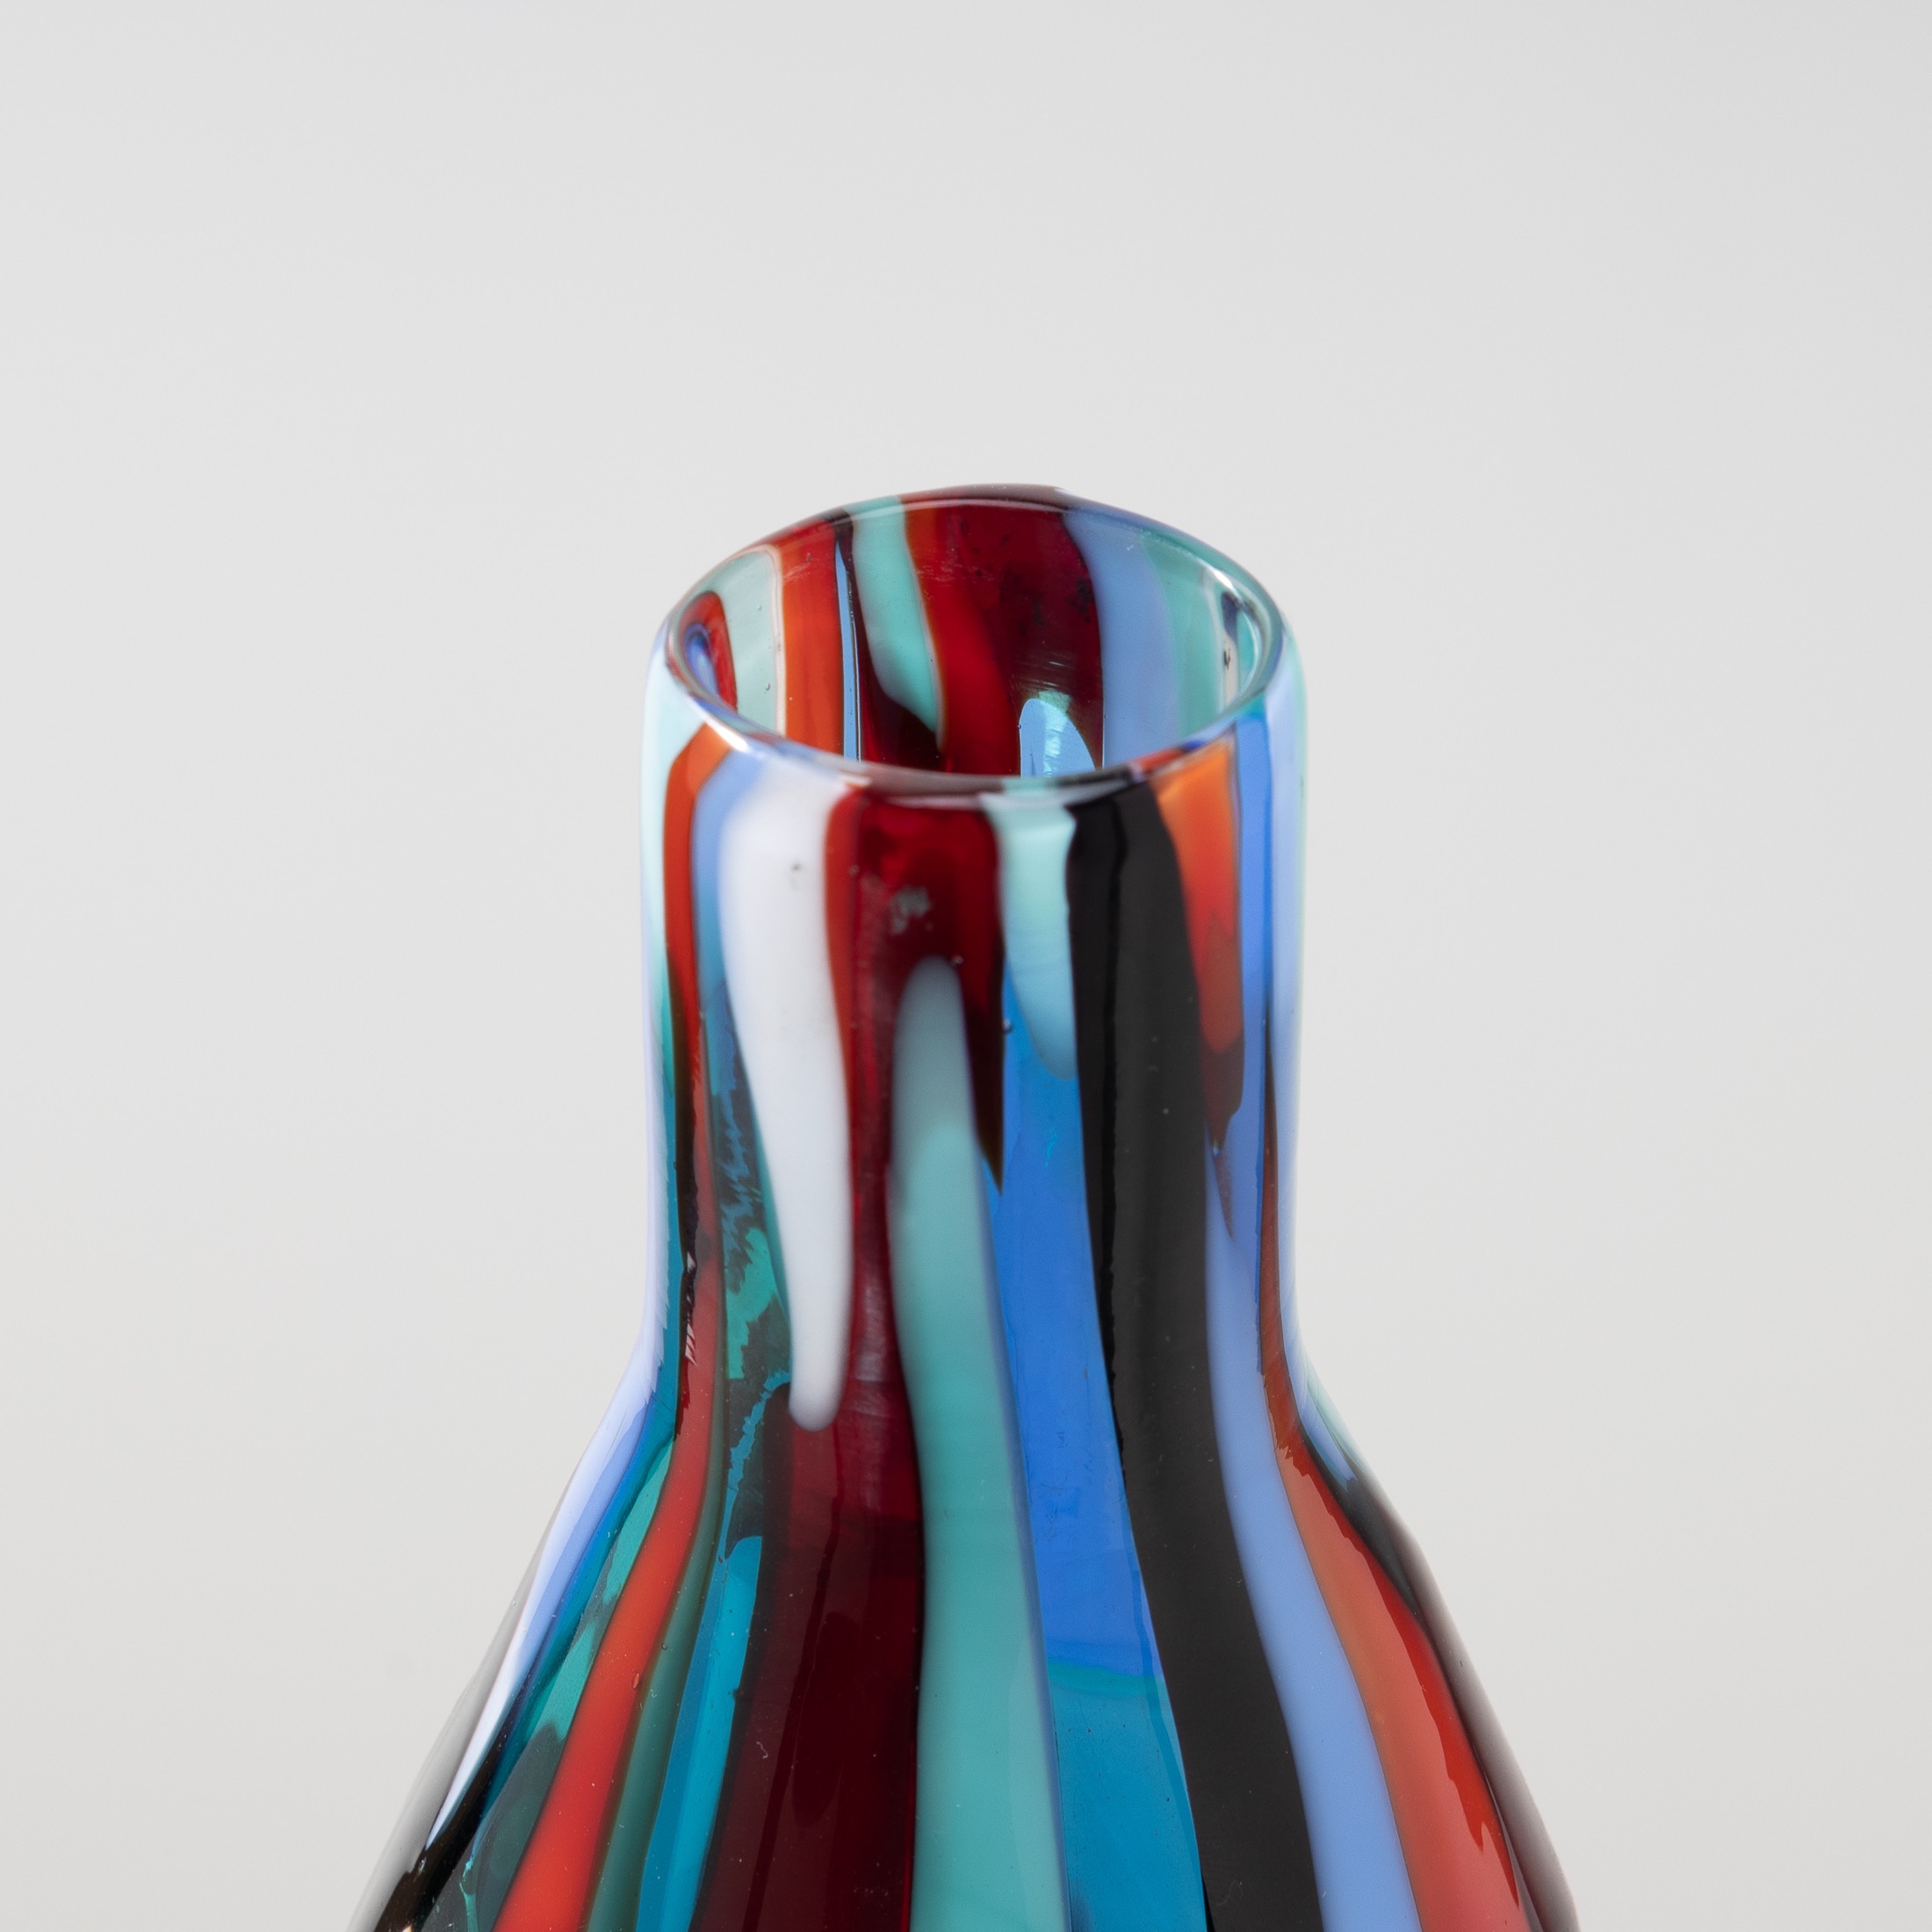 Pezzato arlechino bottle shaped vase by Fulvio Bianconi - model 4319 - Venini Murano - Italy -06